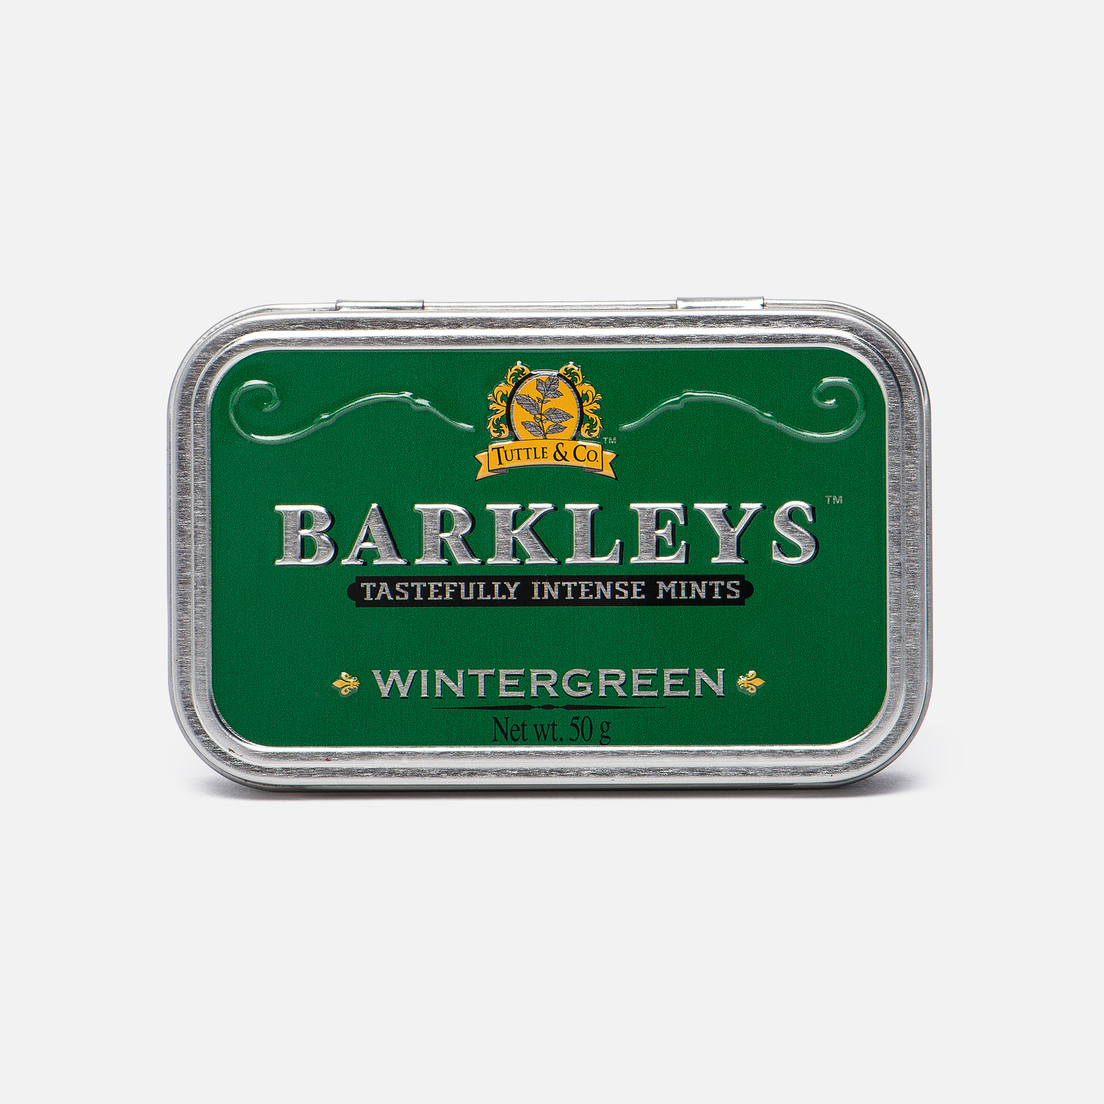 Barkleys Леденцы Mints Wintergreen 50g